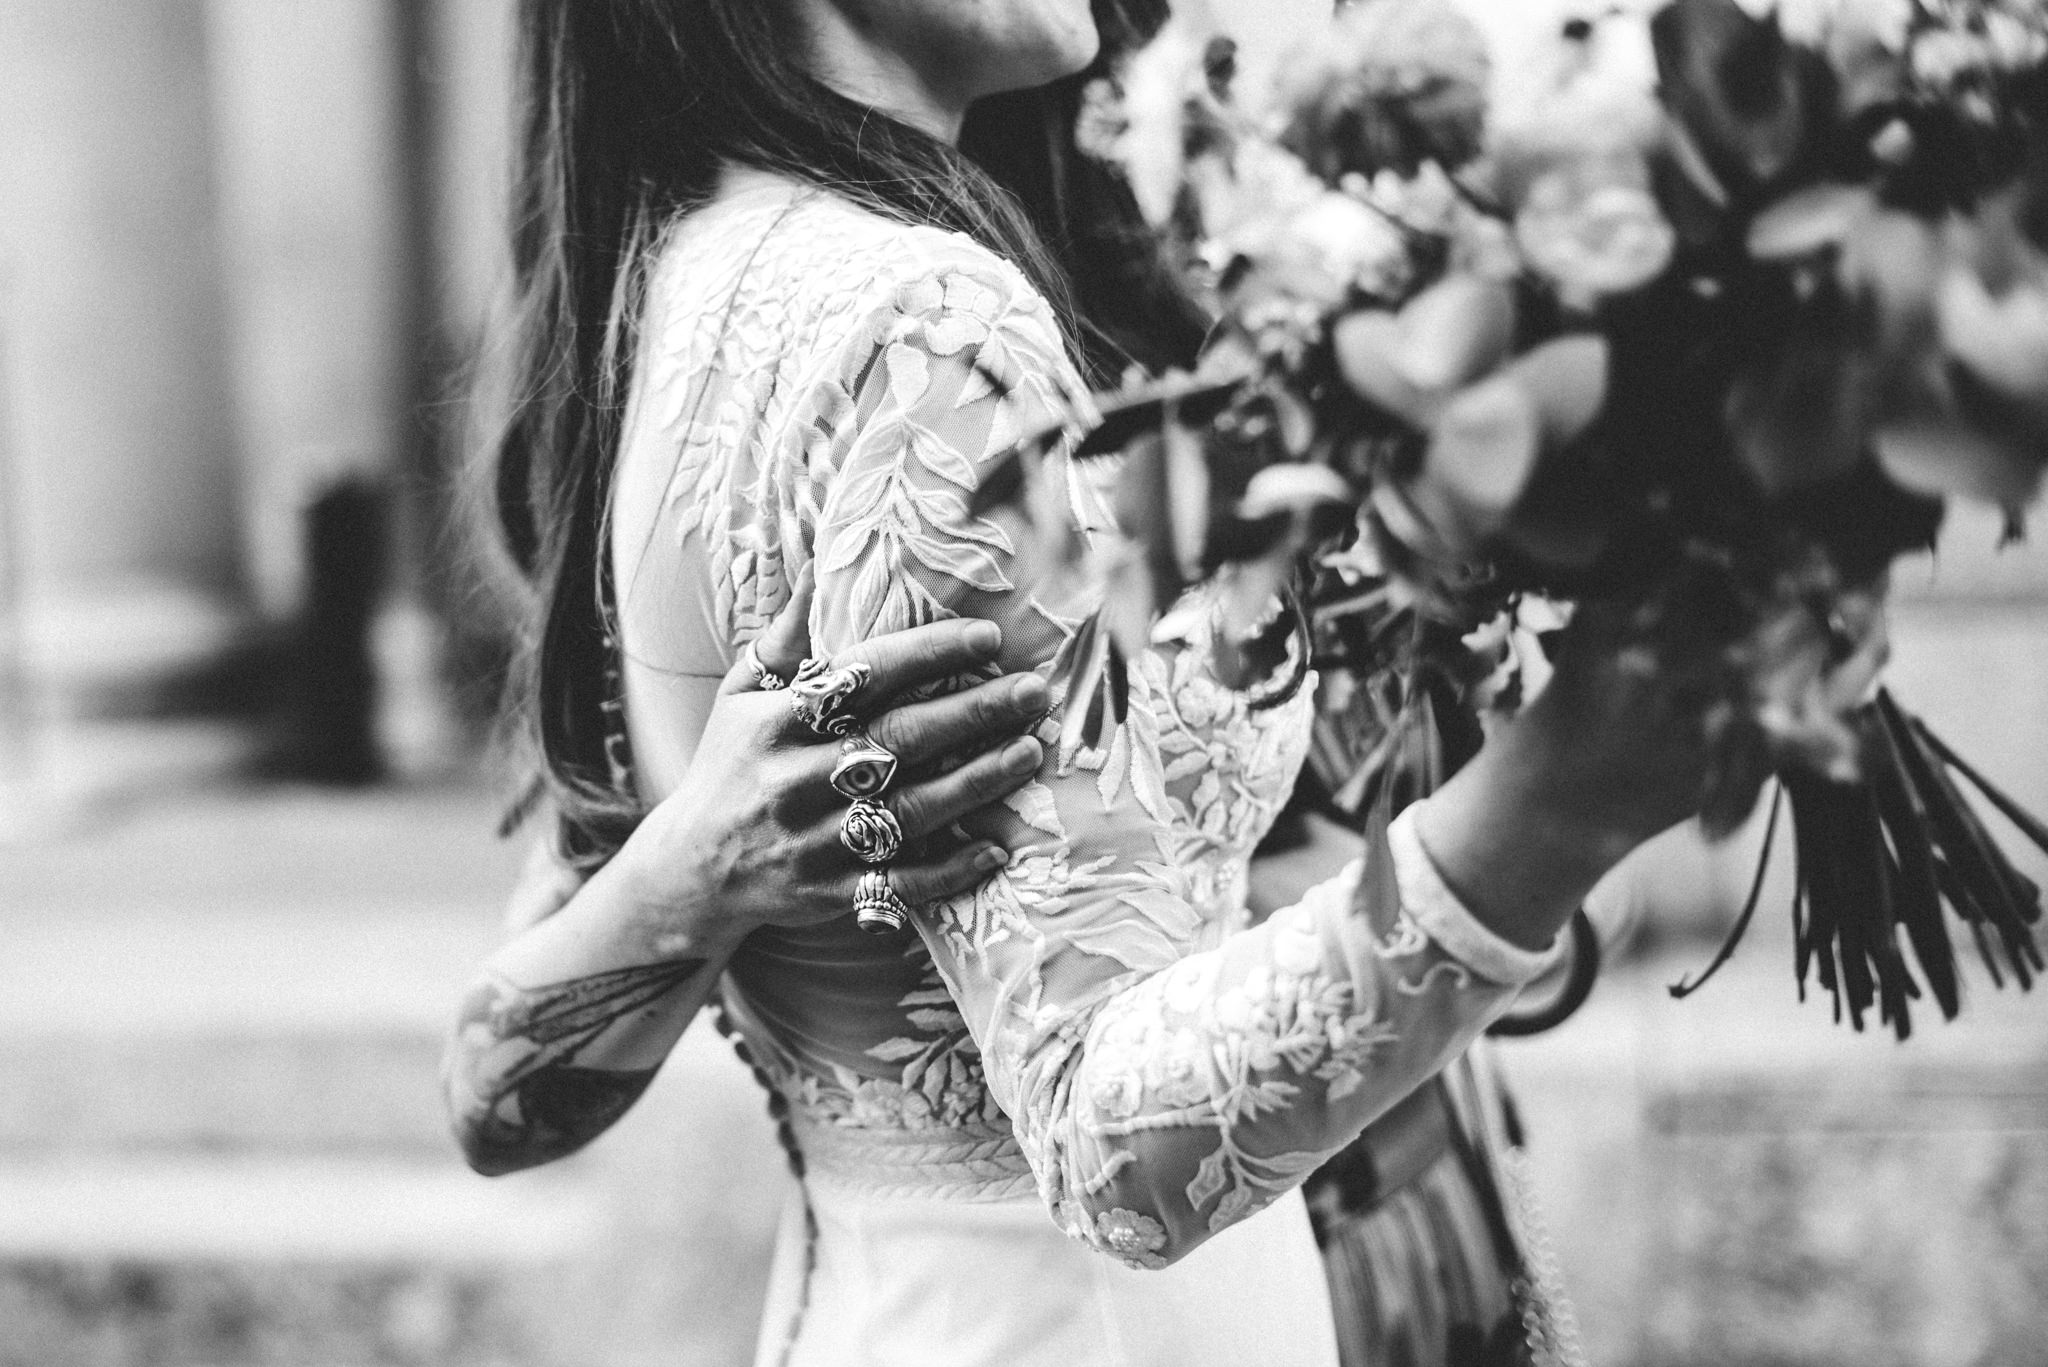 Hermione De Paula wedding dress, edgy wedding photographer, london wedding photography, artistic wedding photography